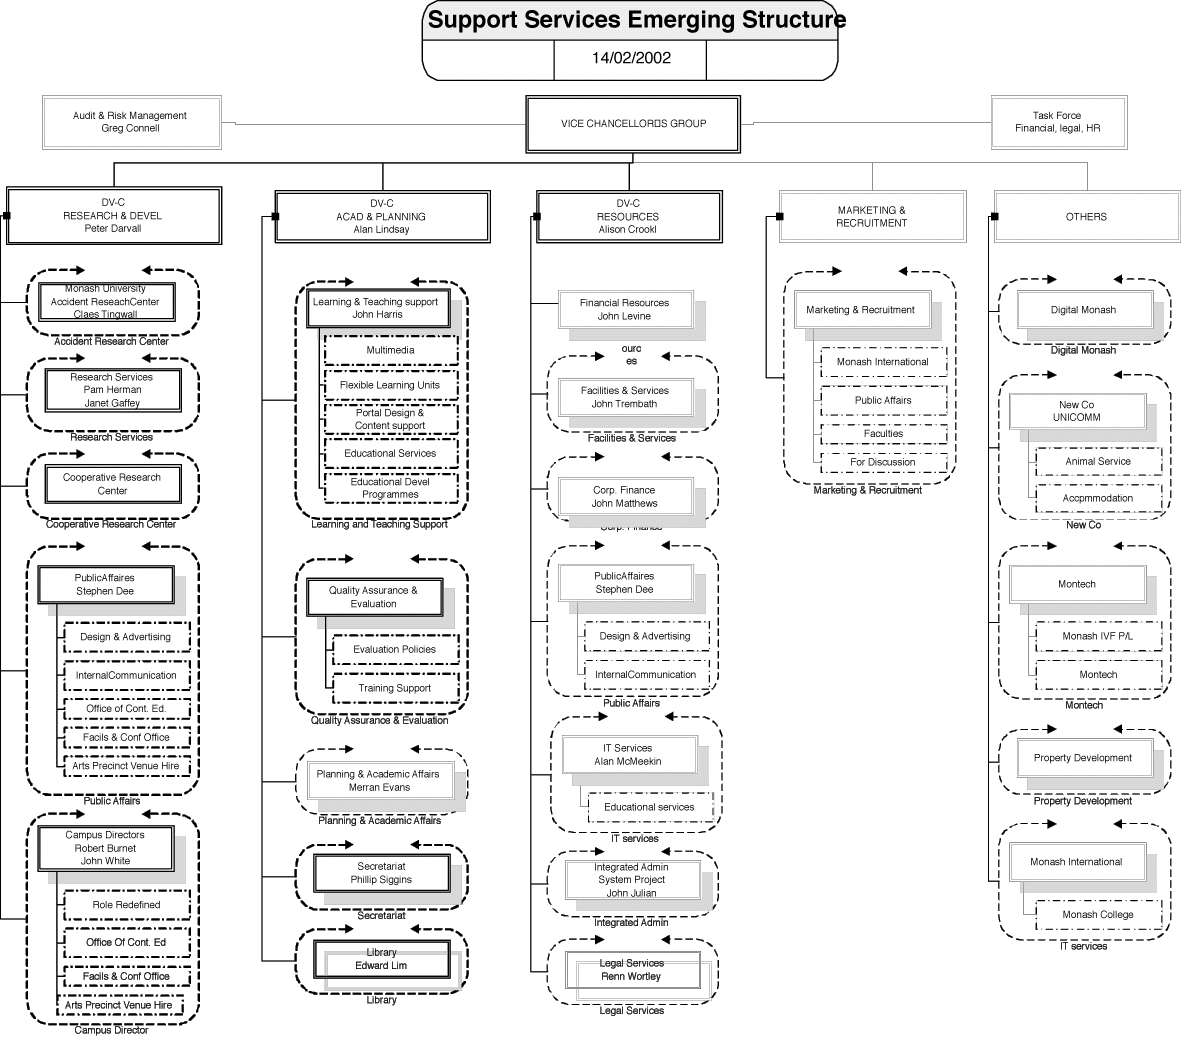 Full organization chart